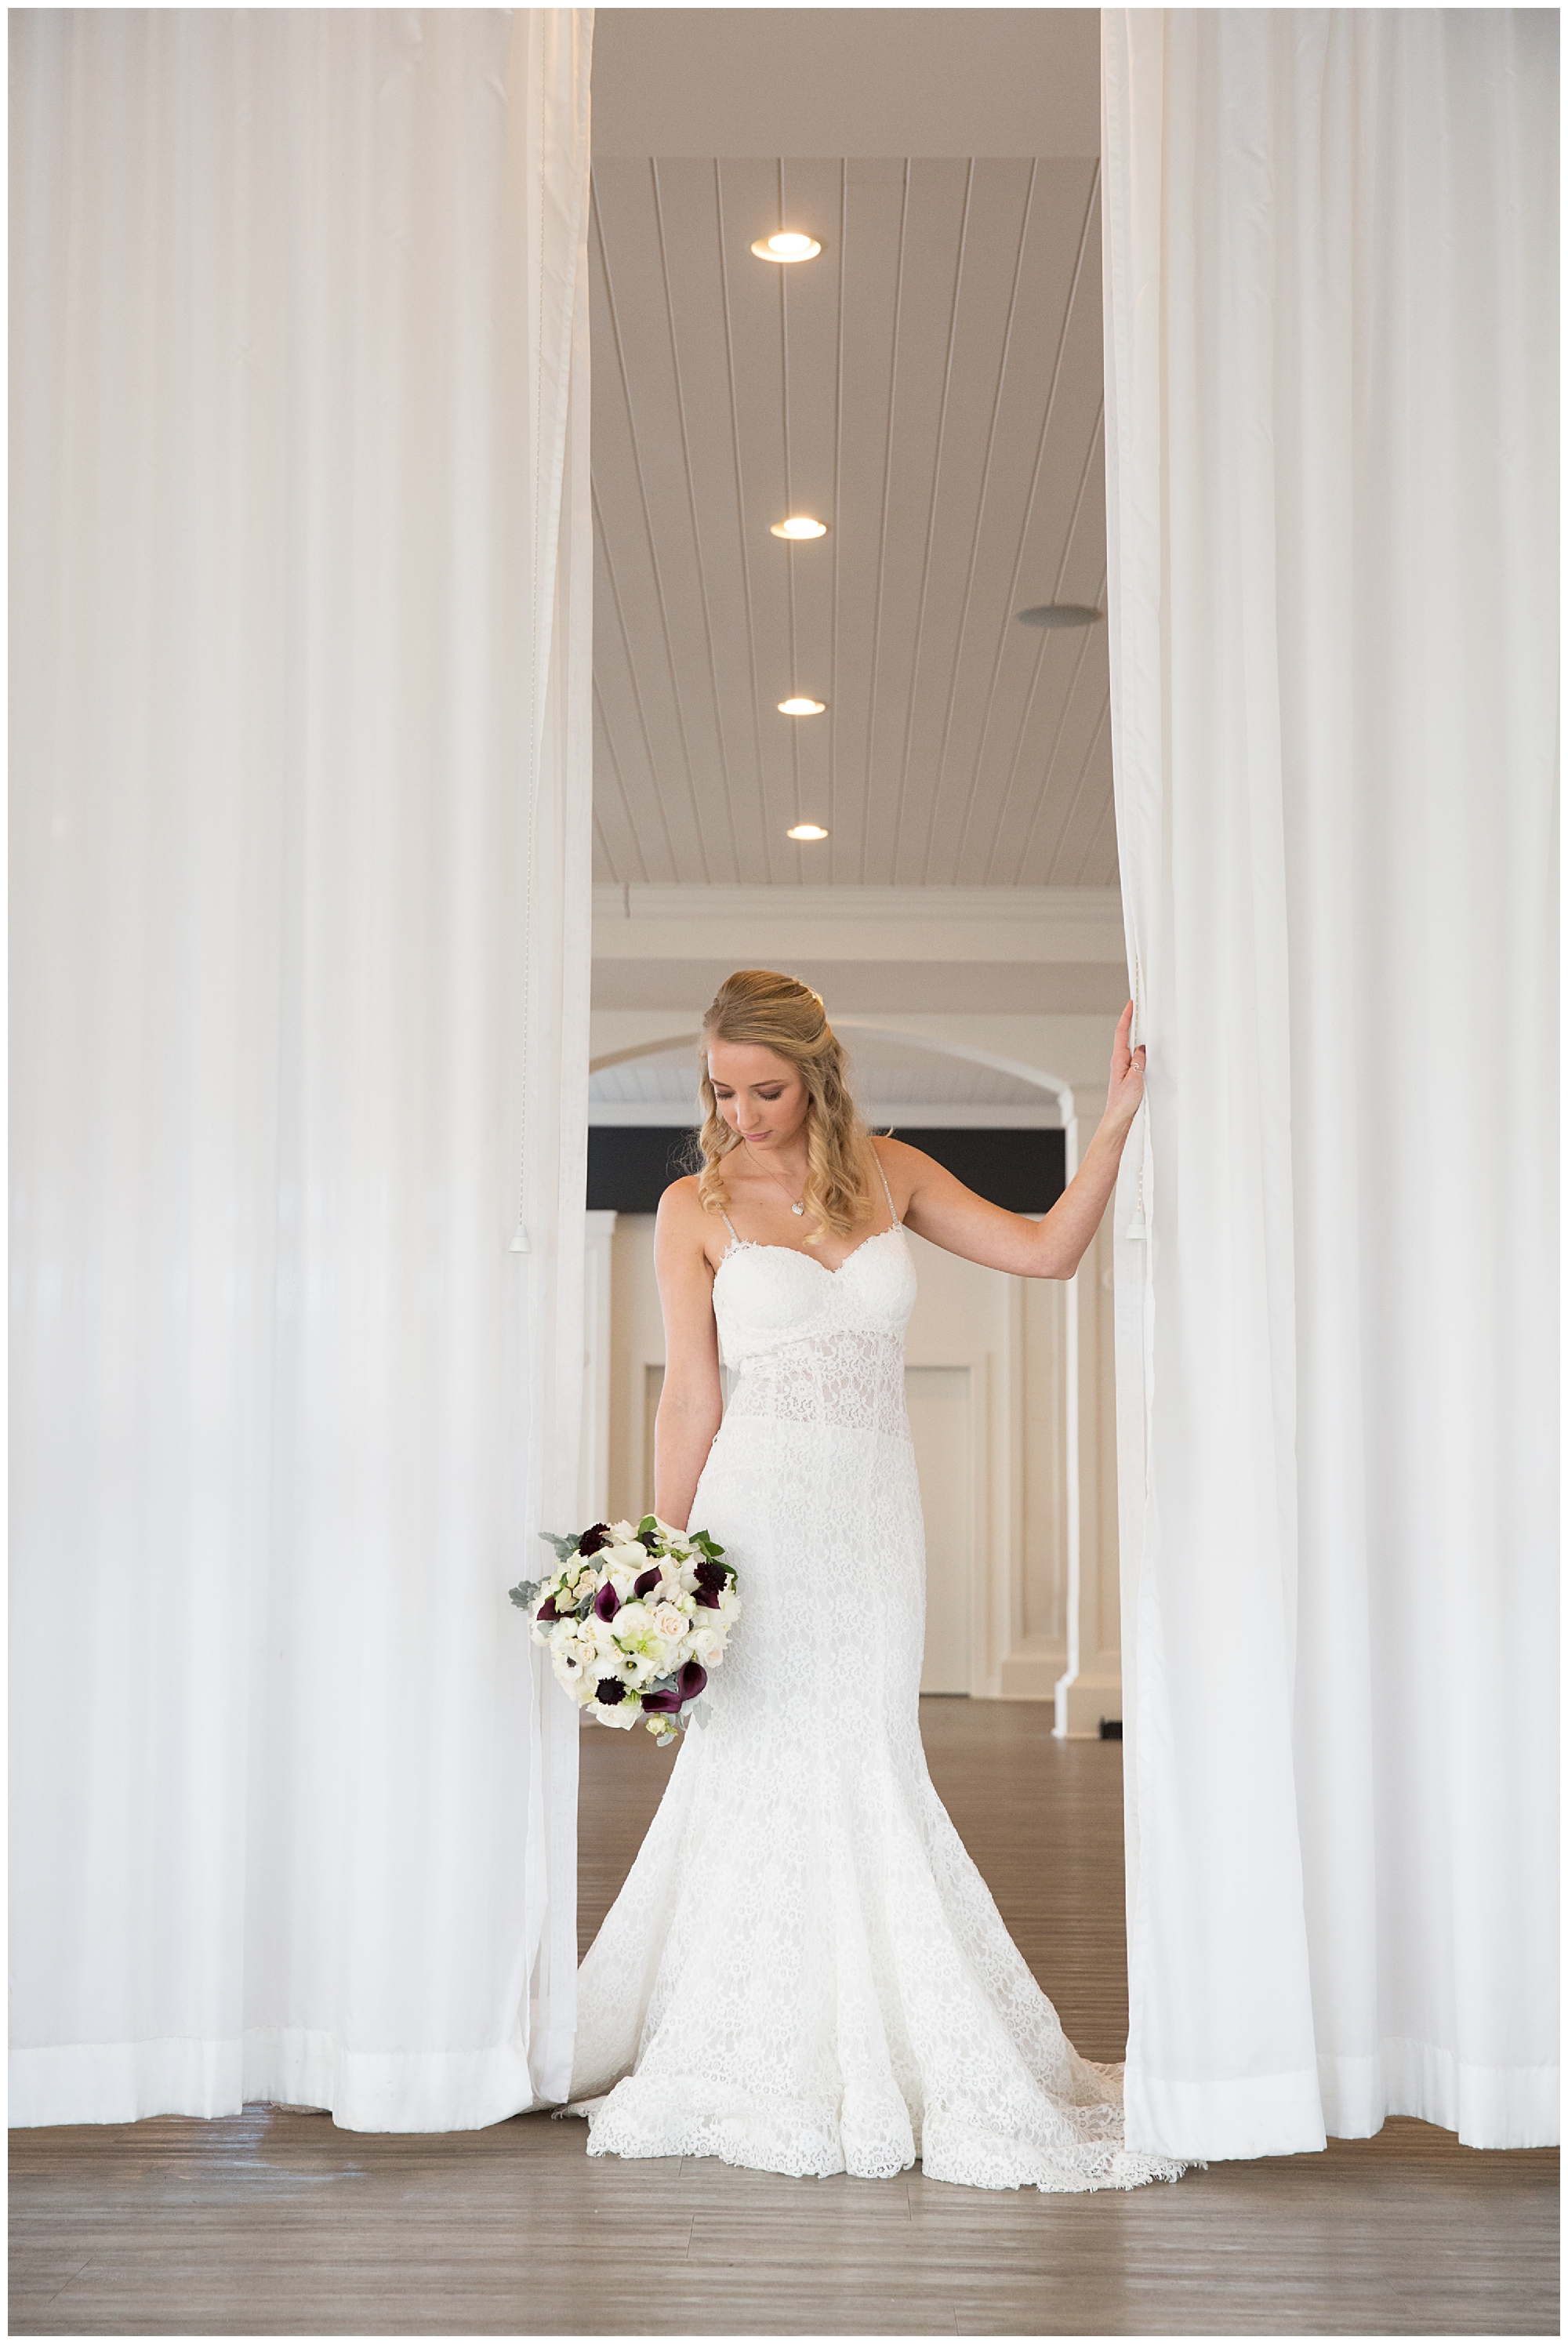  Belle Mer - A Longwood Venue Wedding Photography 